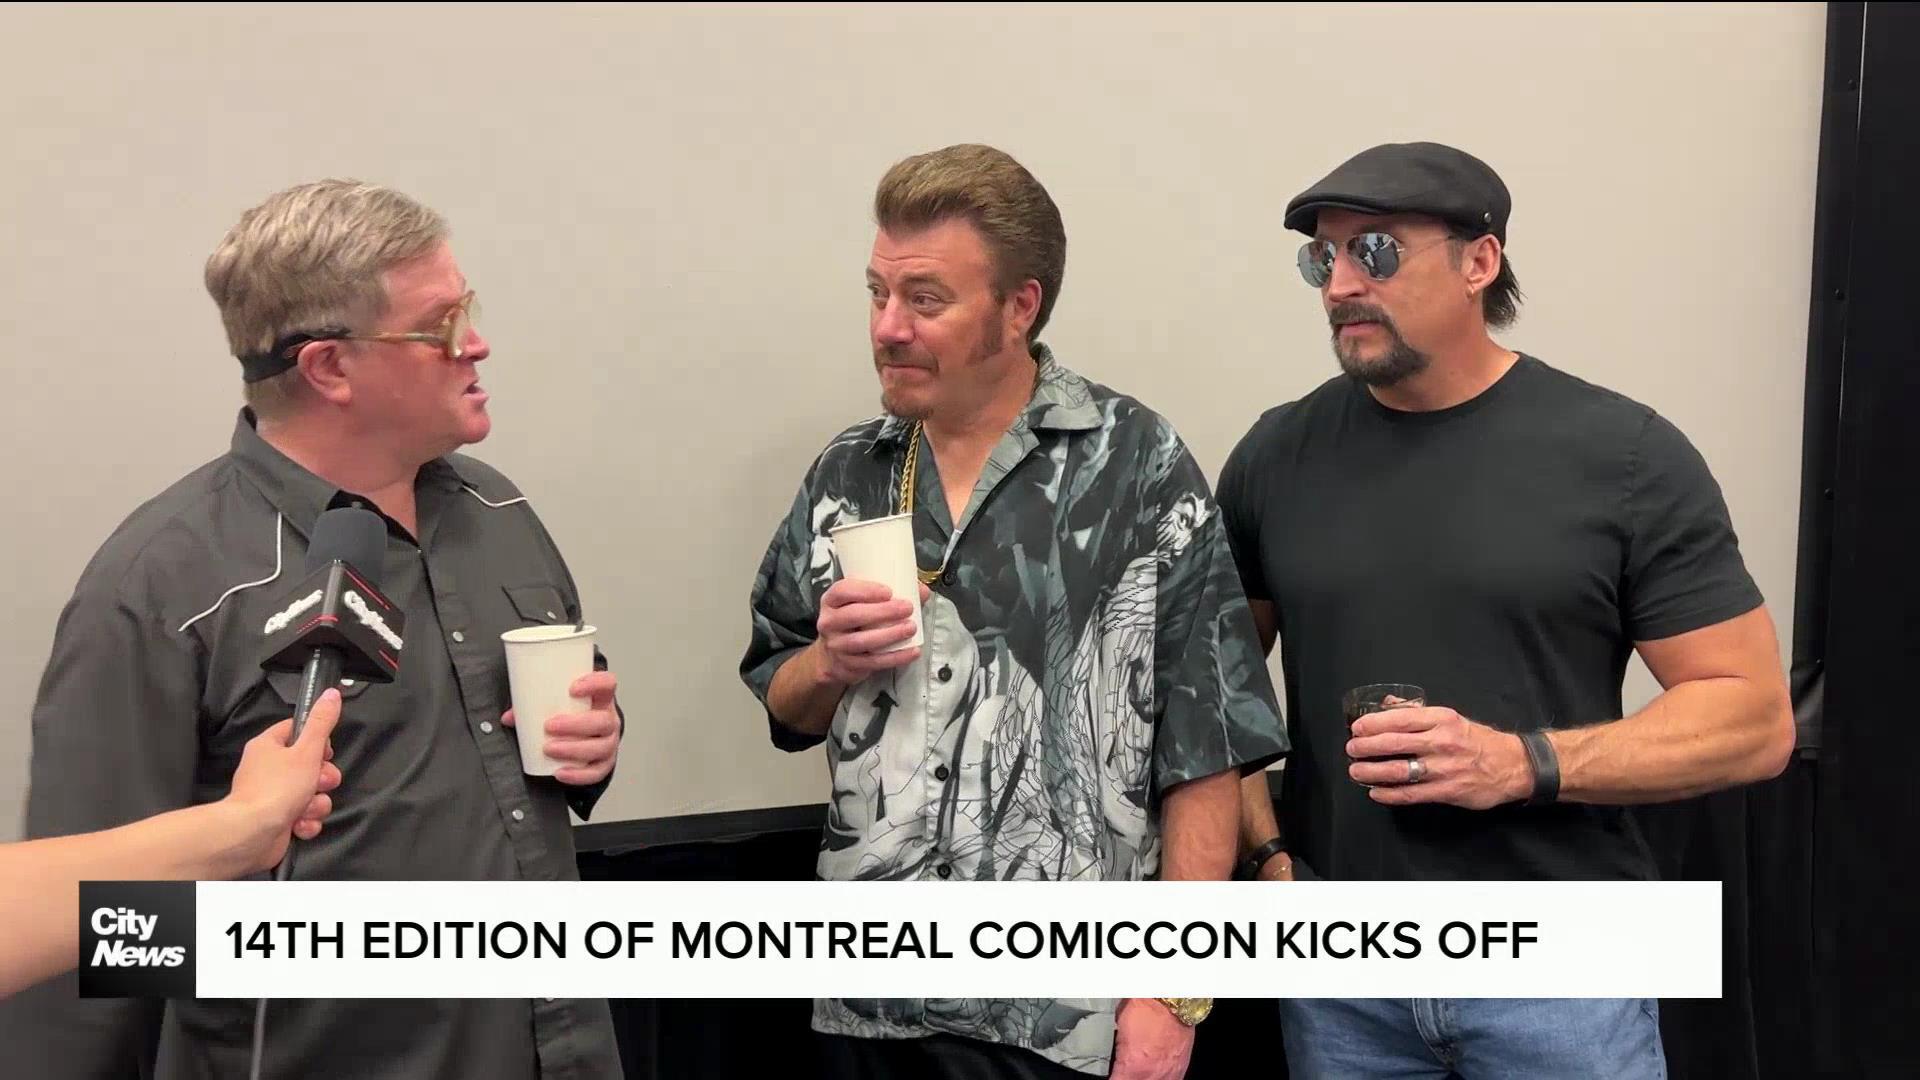 Montreal Comiccon underway